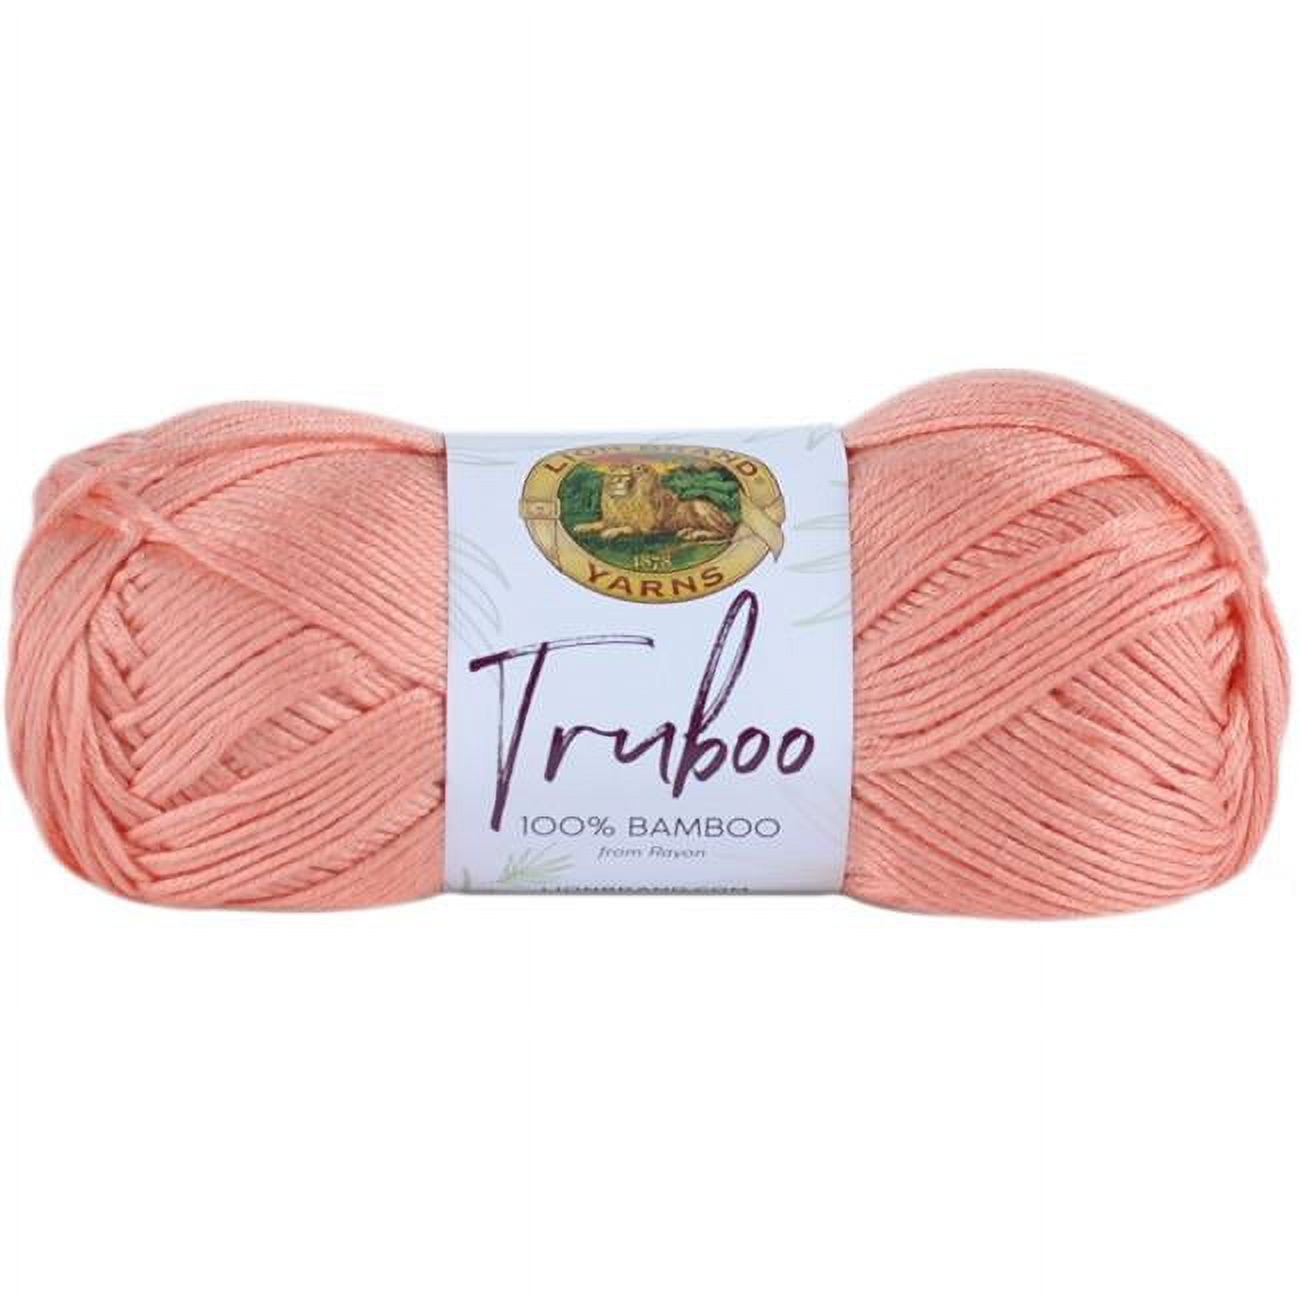 Lion Brand 837-101 Light Pink - Yarn Truboo 